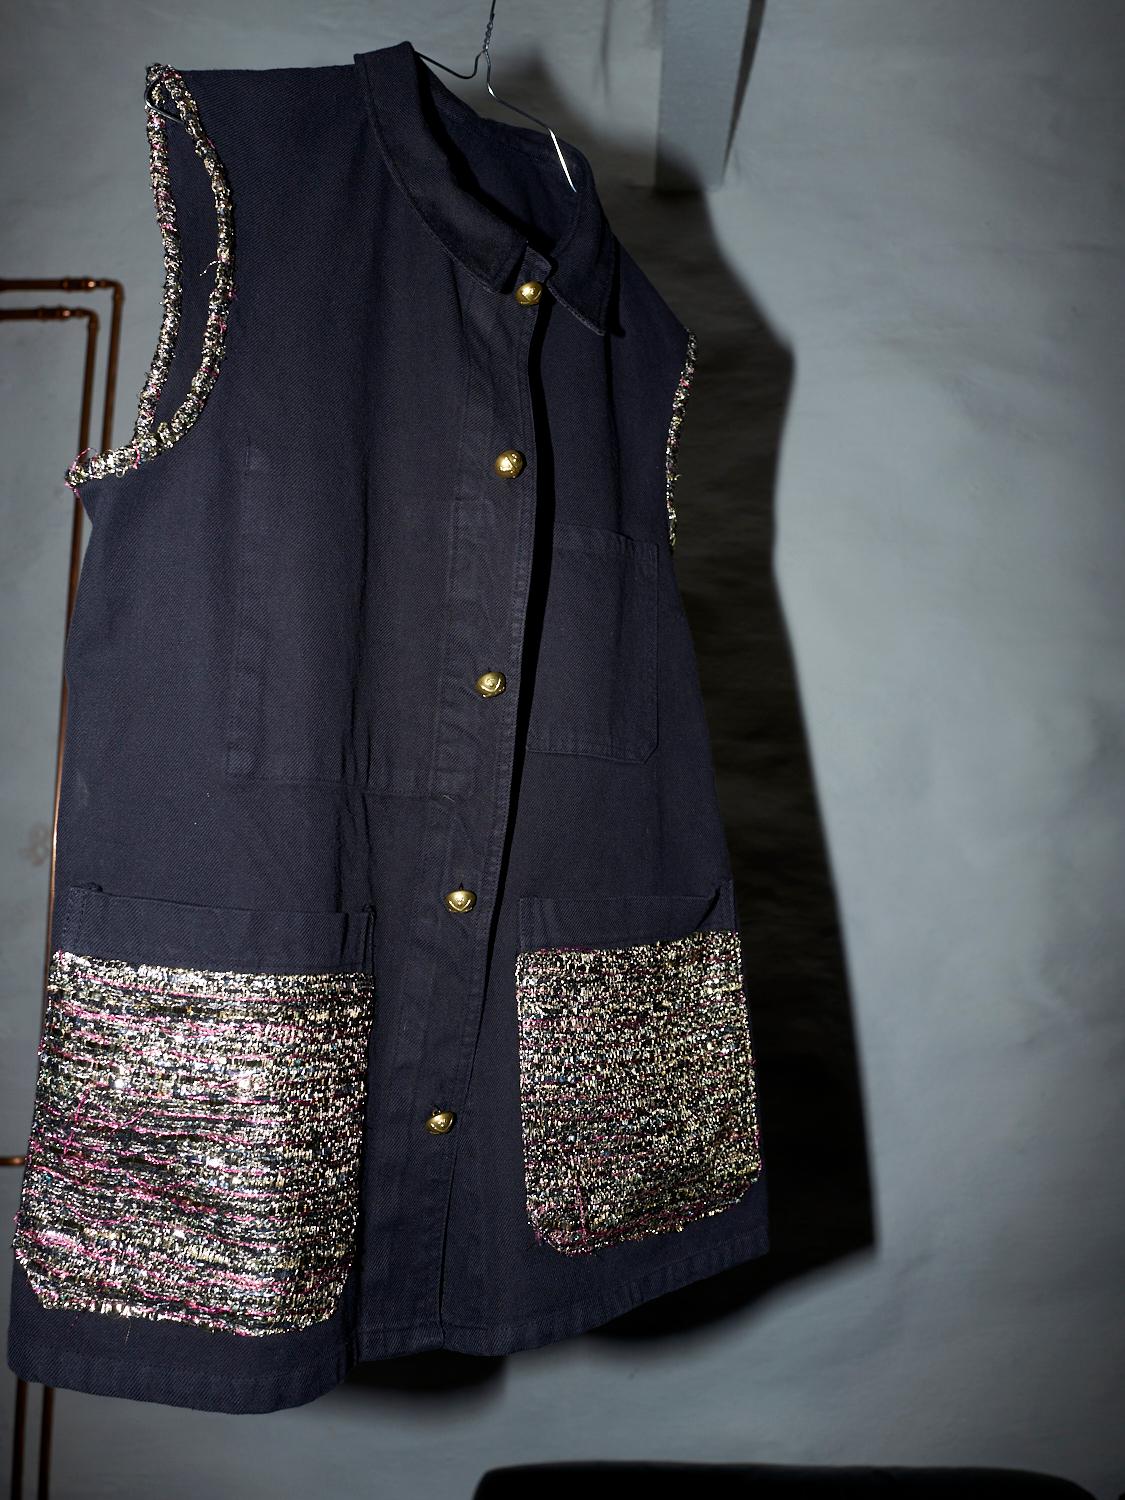 Embellished Sleeveless Jacket Vest Evening Black Gold Tweed Pockets J Dauphin 2